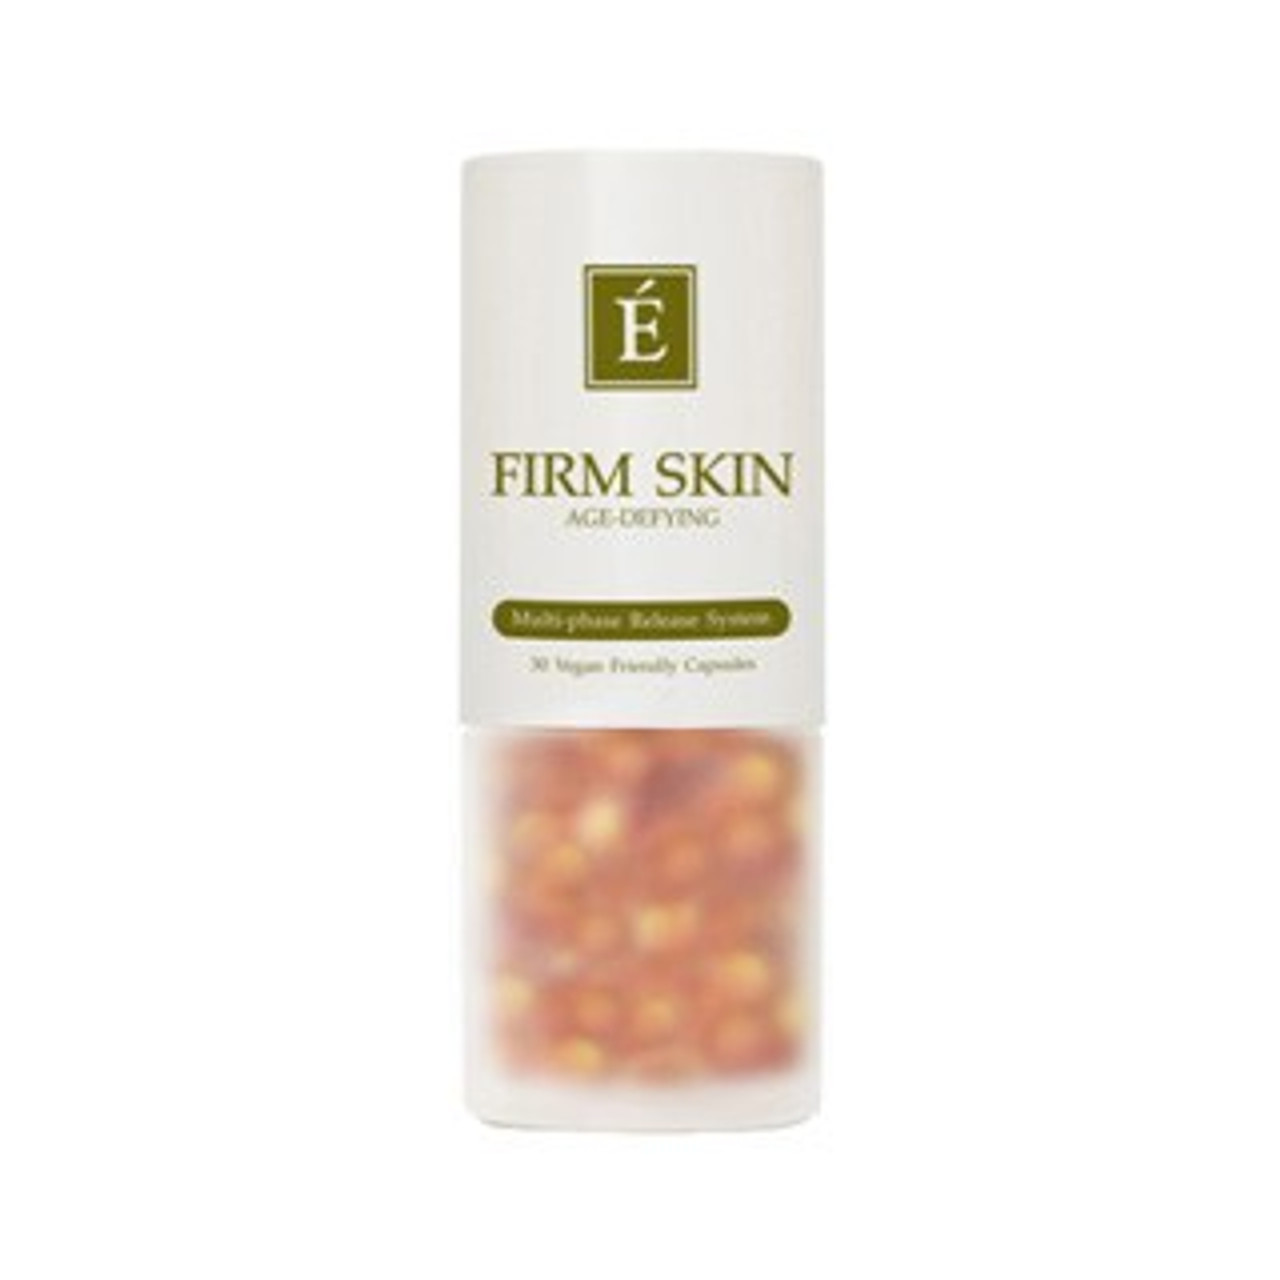 Eminence VitaSkin Firm Skin - 30 Capsules